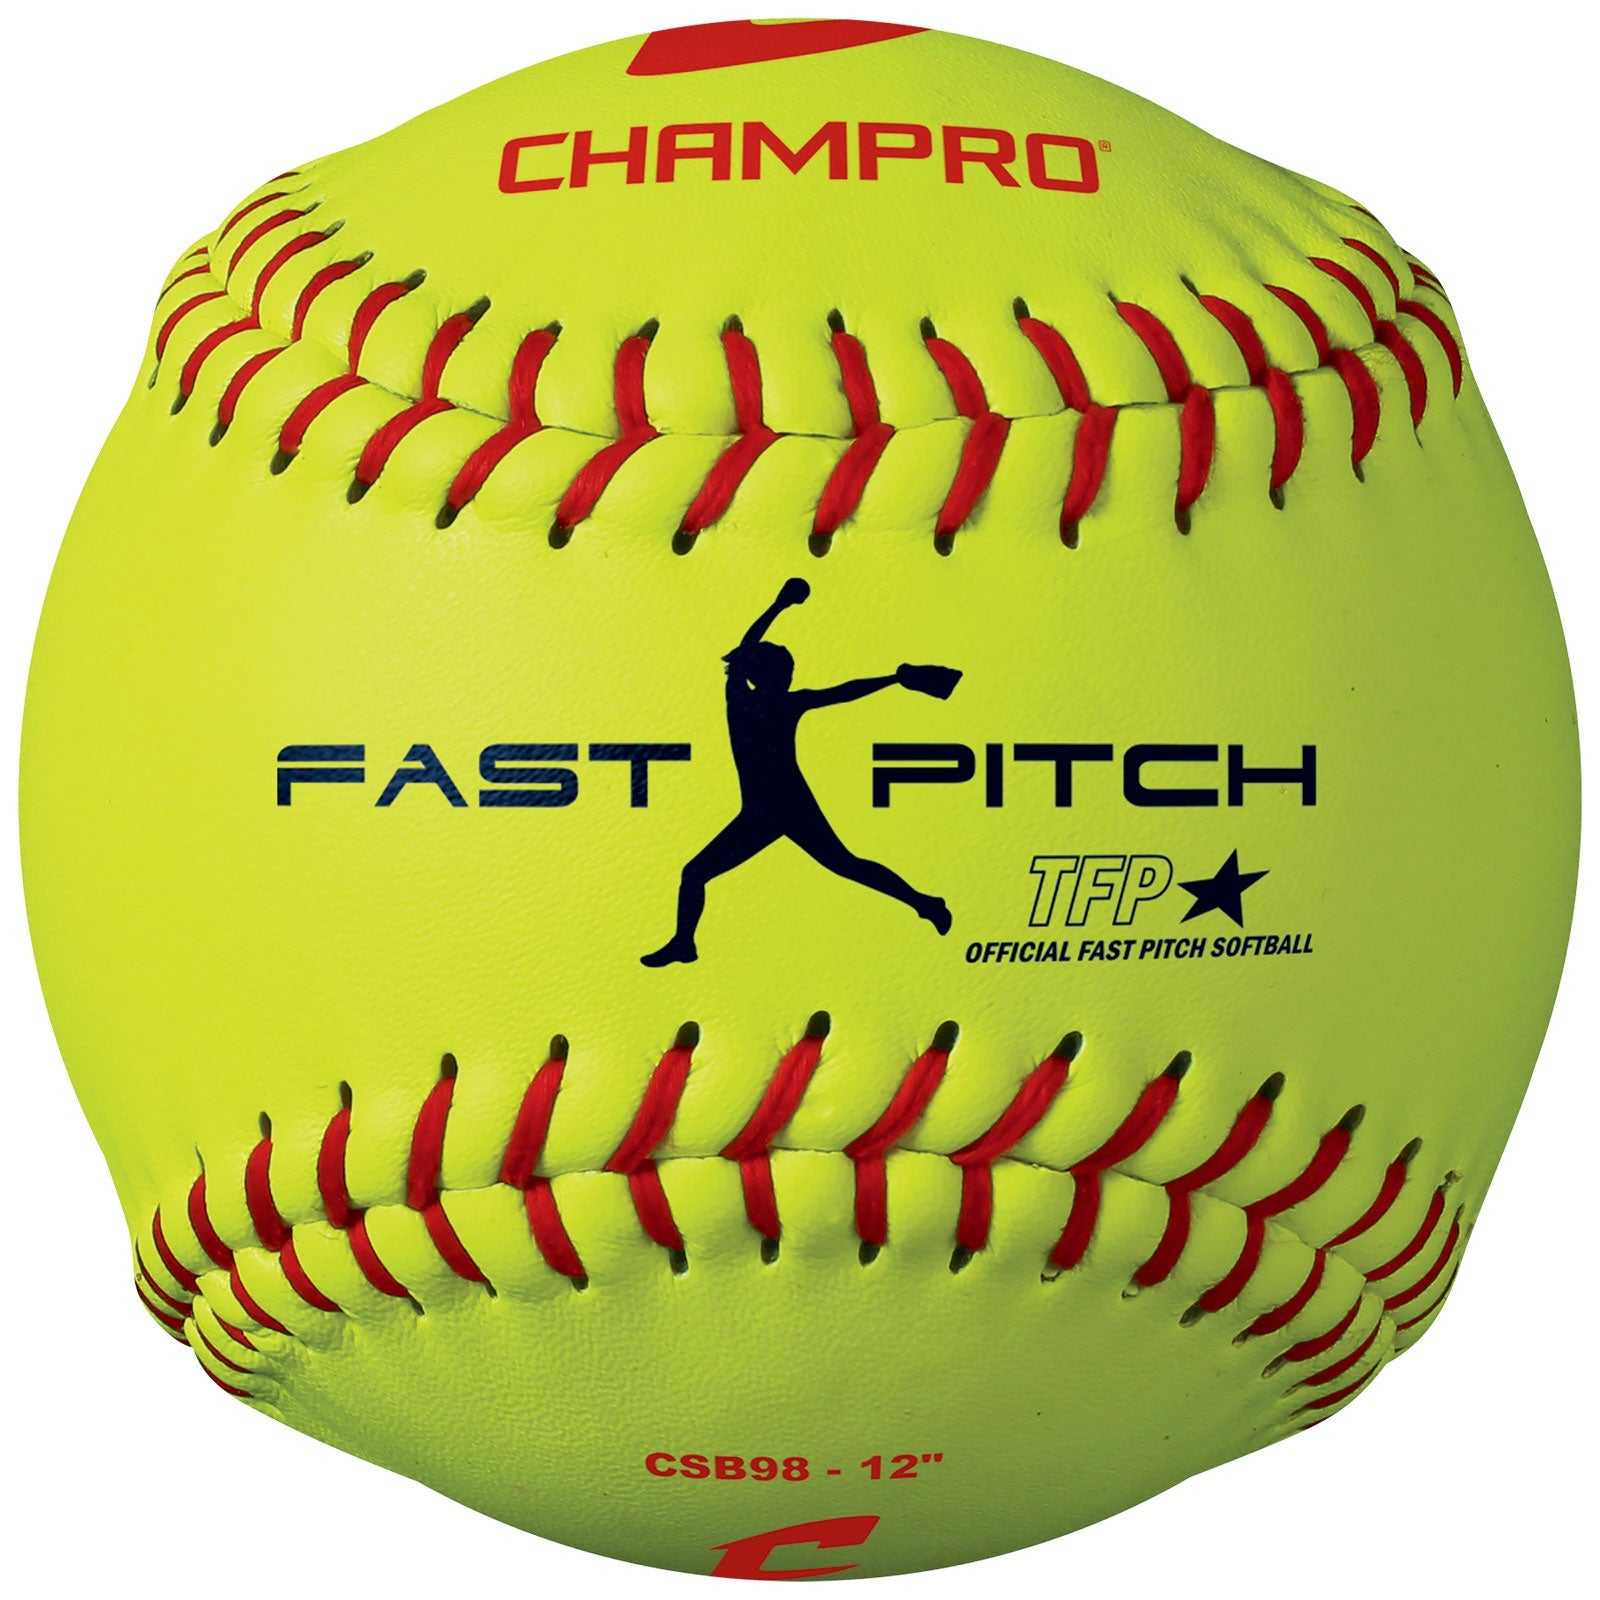 Champro CSB98 12" Fast Pitch Softball - Optic Yellow - HIT a Double